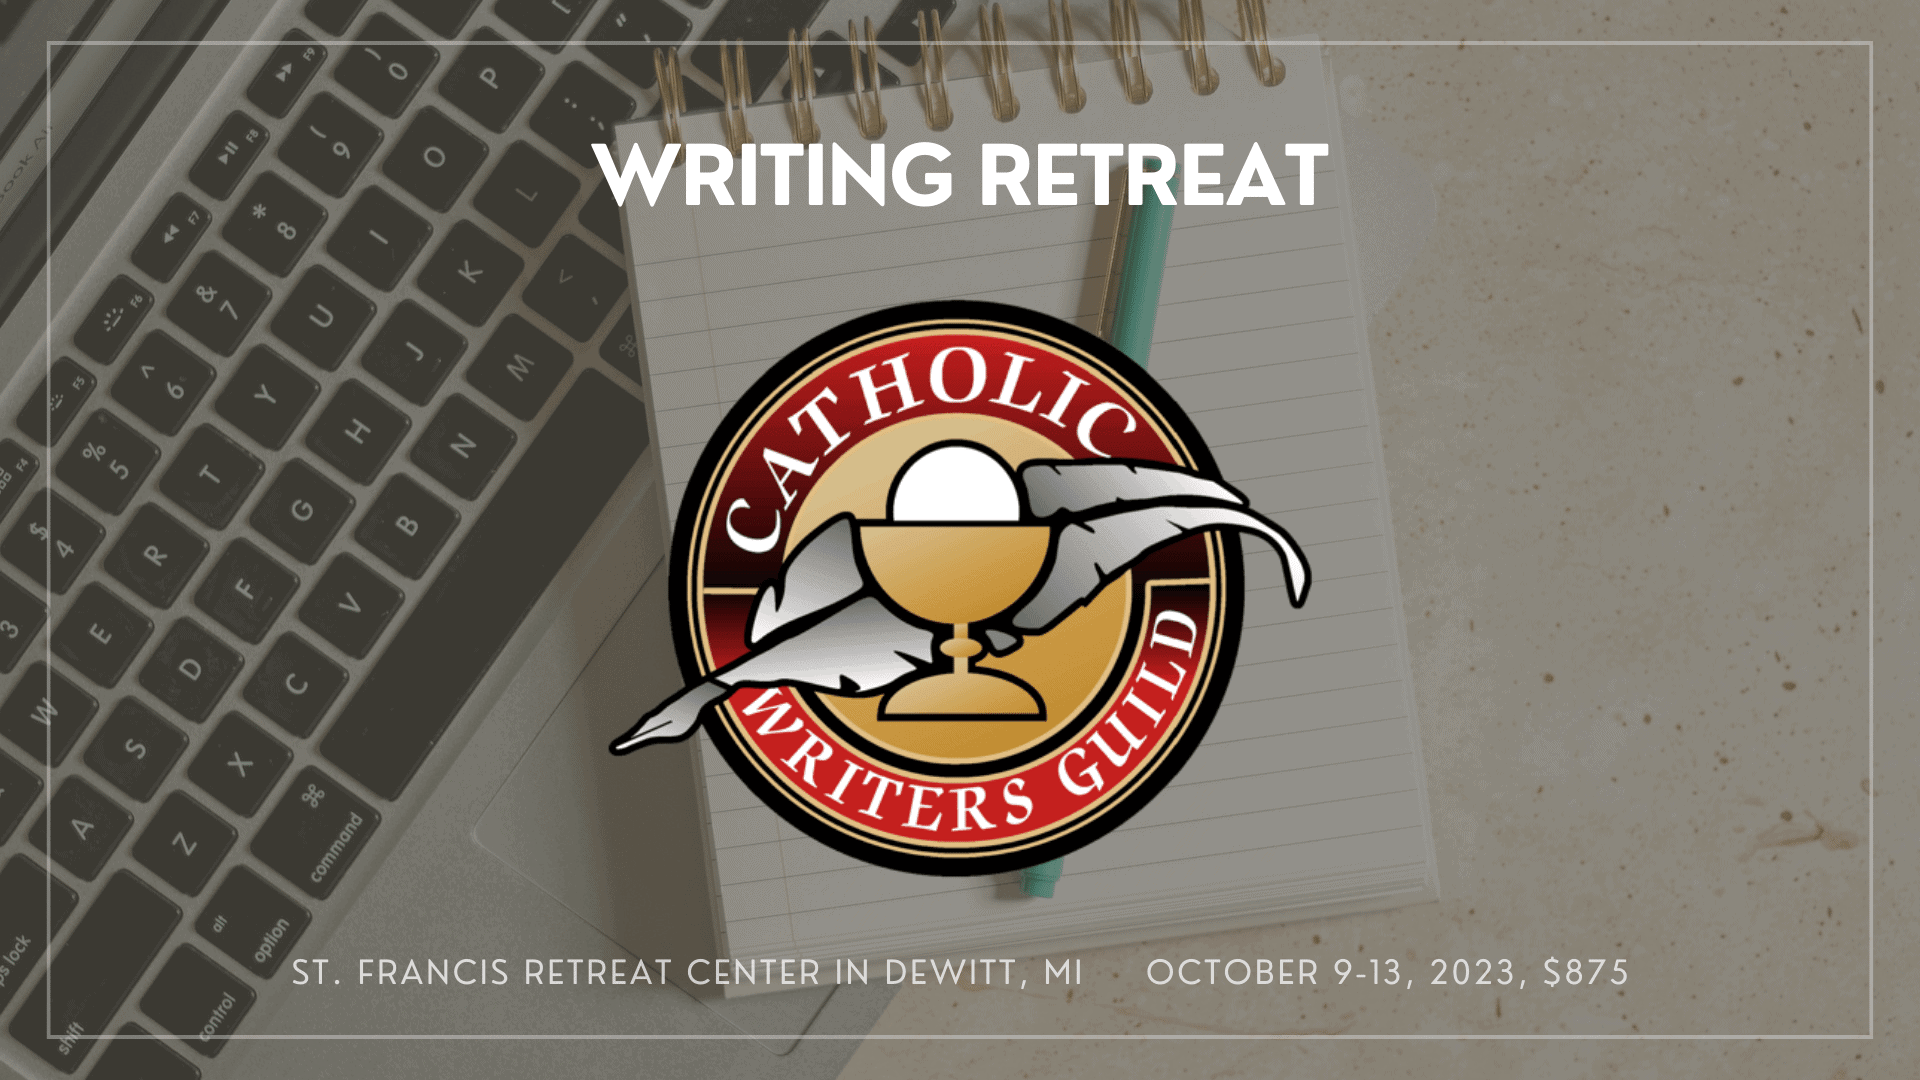 Catholic Writers Retreat in DeWitt, MI | October 9-13, 2023 | Catholic Writers Guild